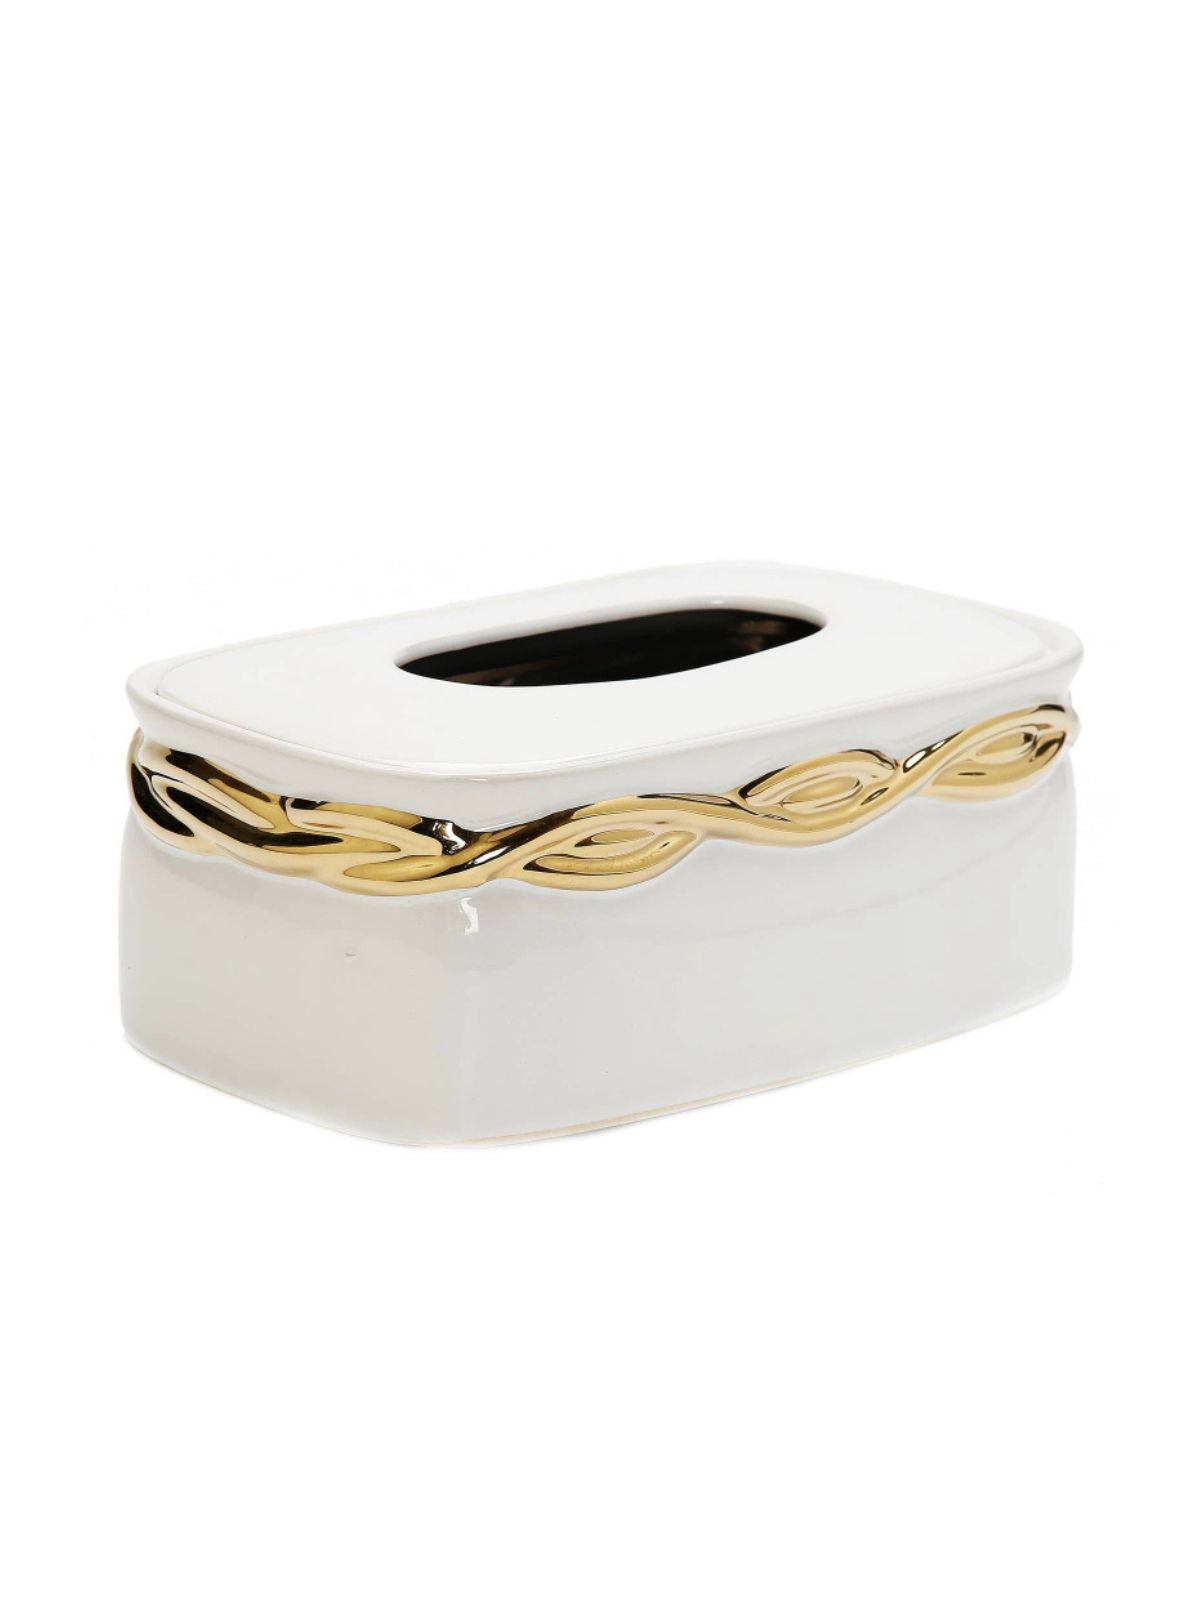 White Ceramic Tissue Box with Stunning Gold Design.